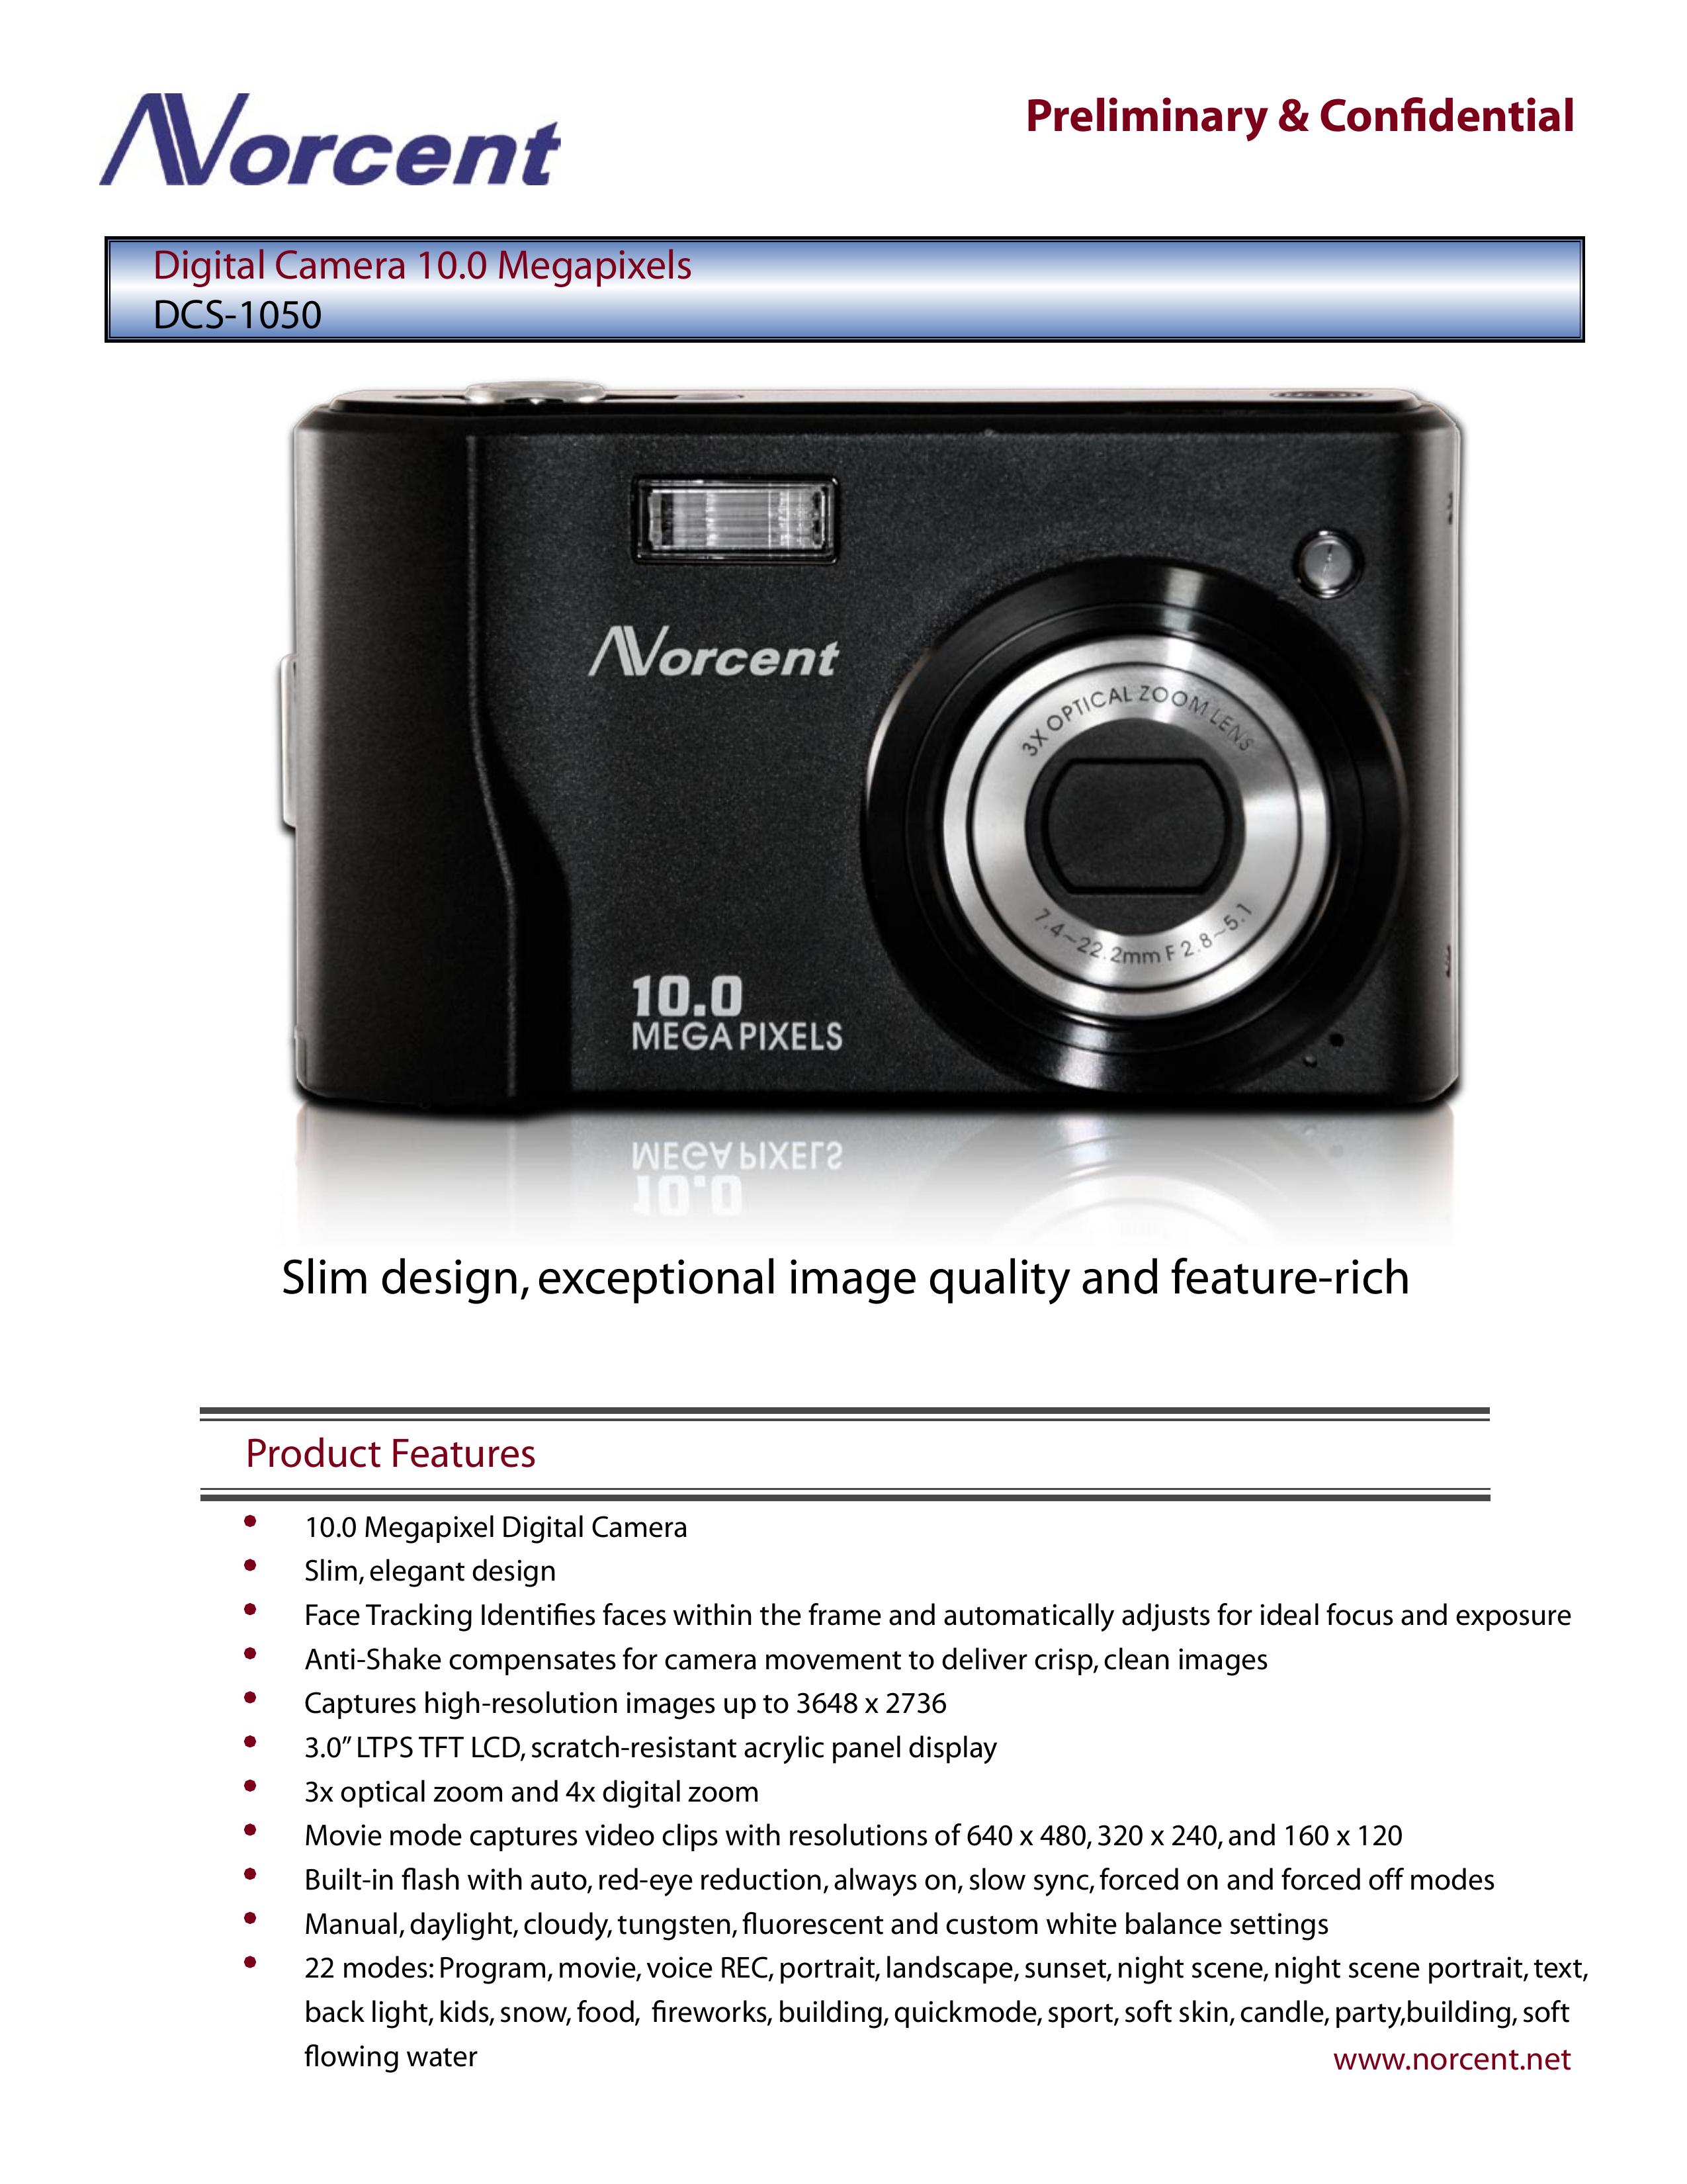 Norcent Technologies DCS-1050 Digital Camera User Manual